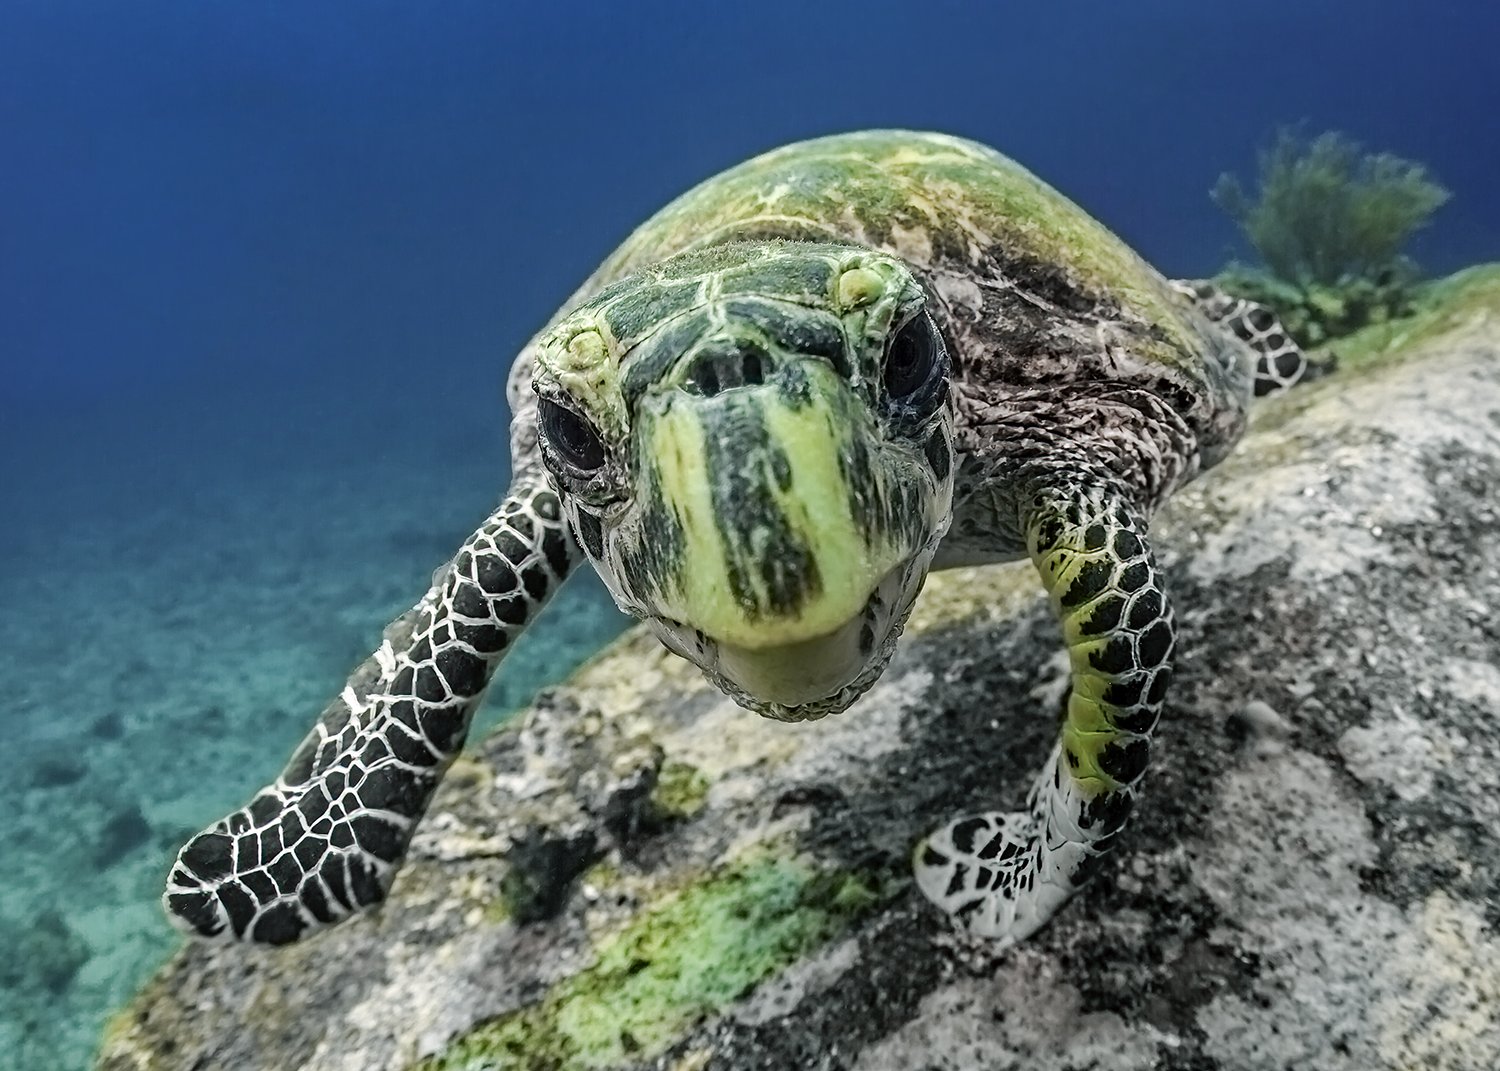  Hawksbill Sea Turtle, 2013 Phuket, Thailand 